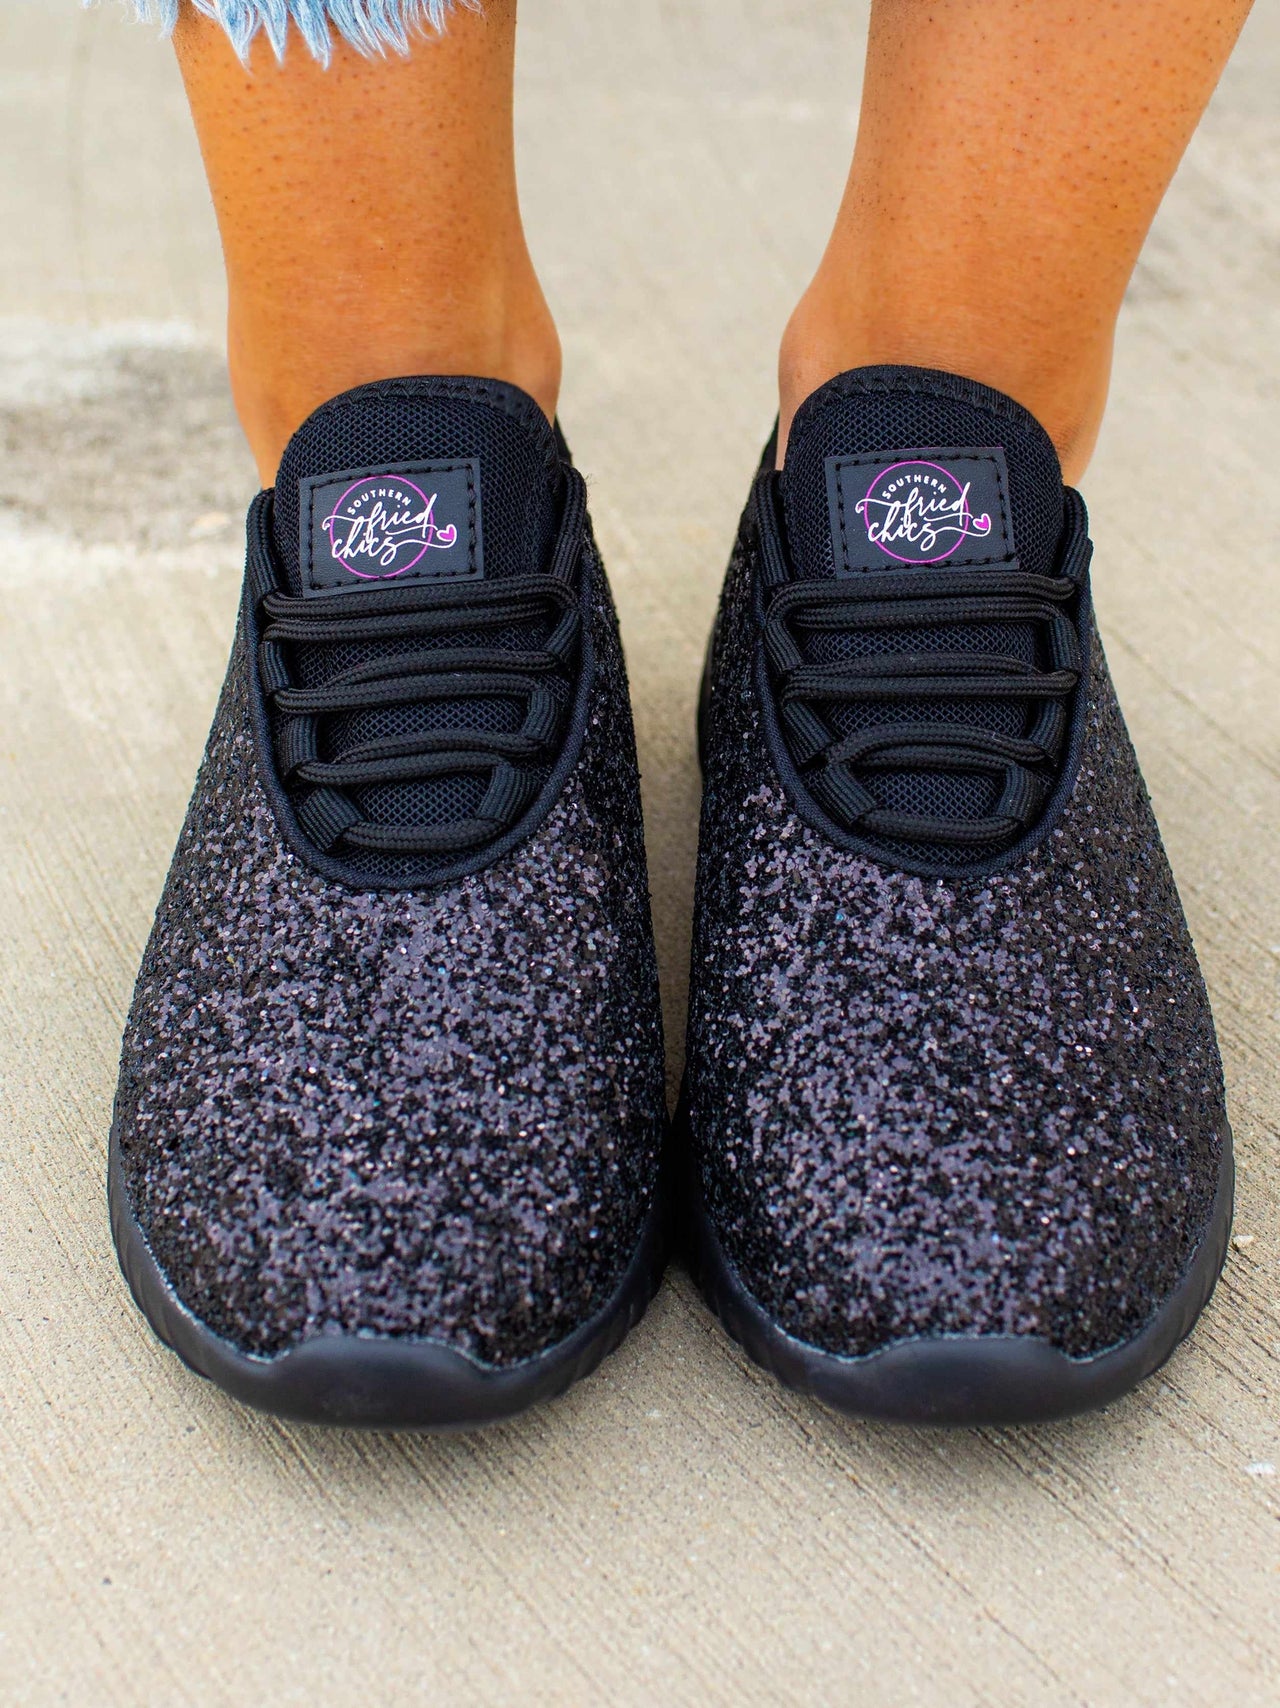 Glitter Bomb Sneakers - Black on Black